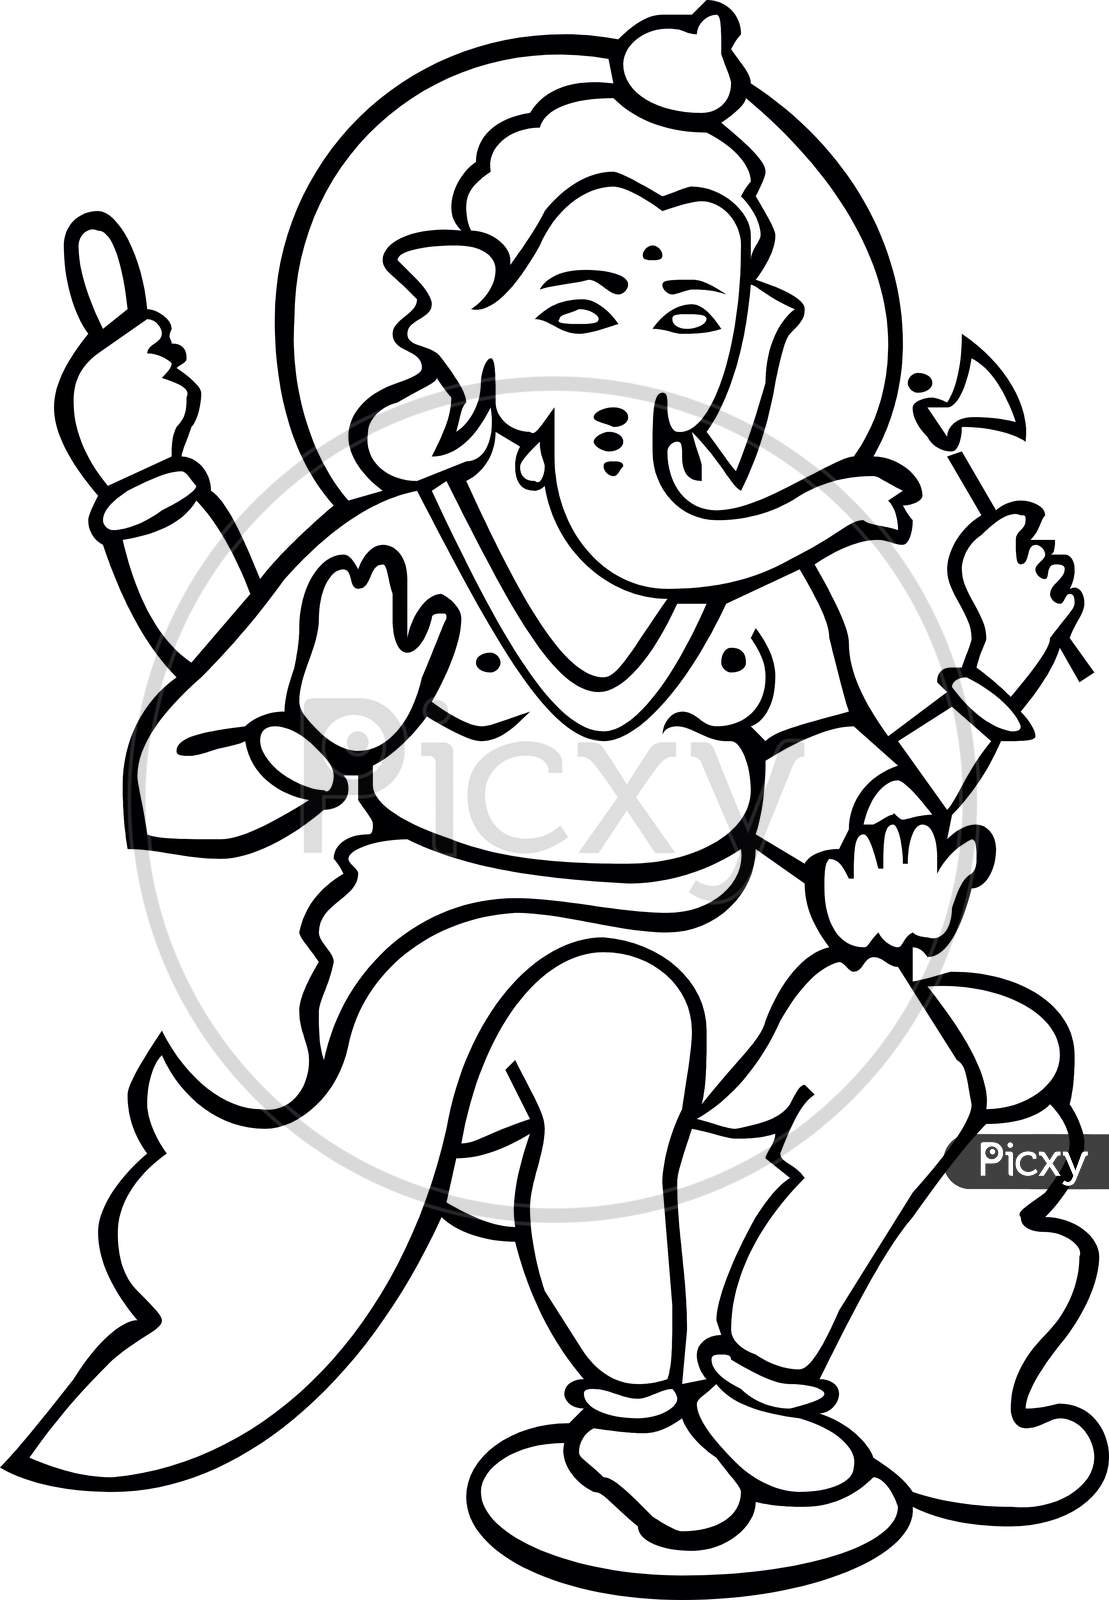 Ganesha The Lord Of Wisdom Design Art Illustration